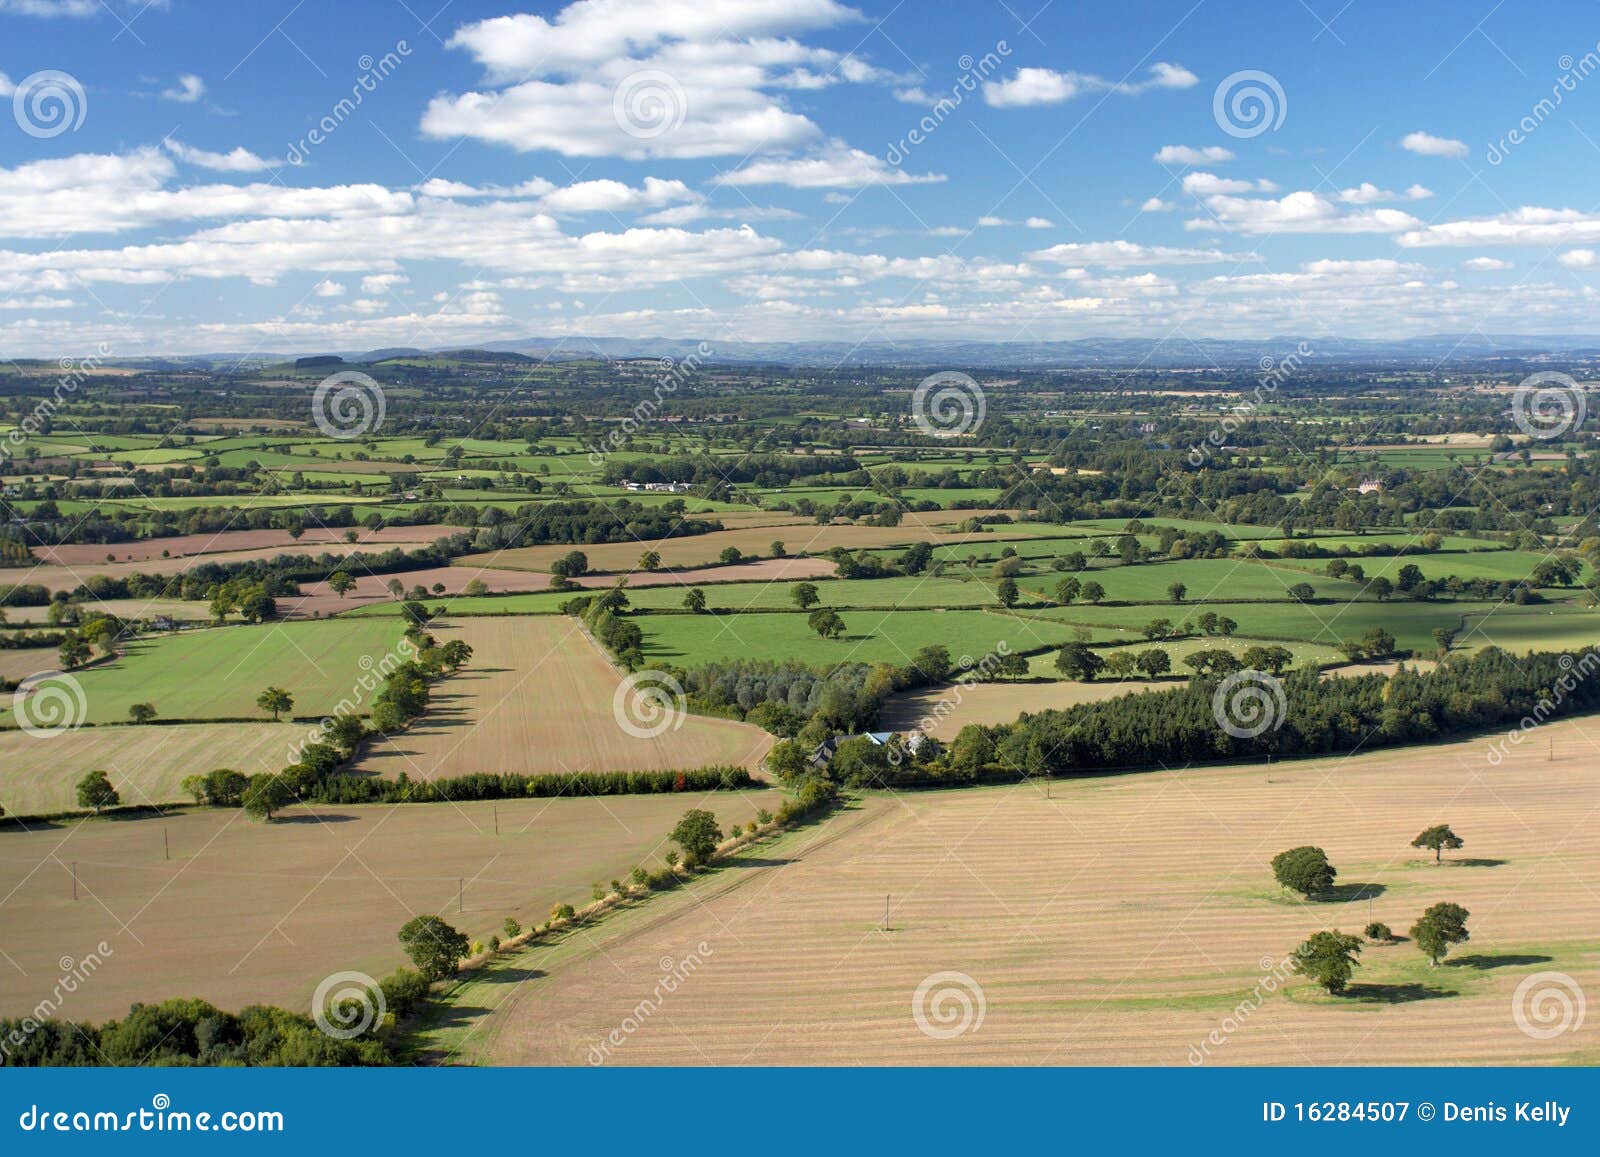 rolling farming landscape in shropshire, england